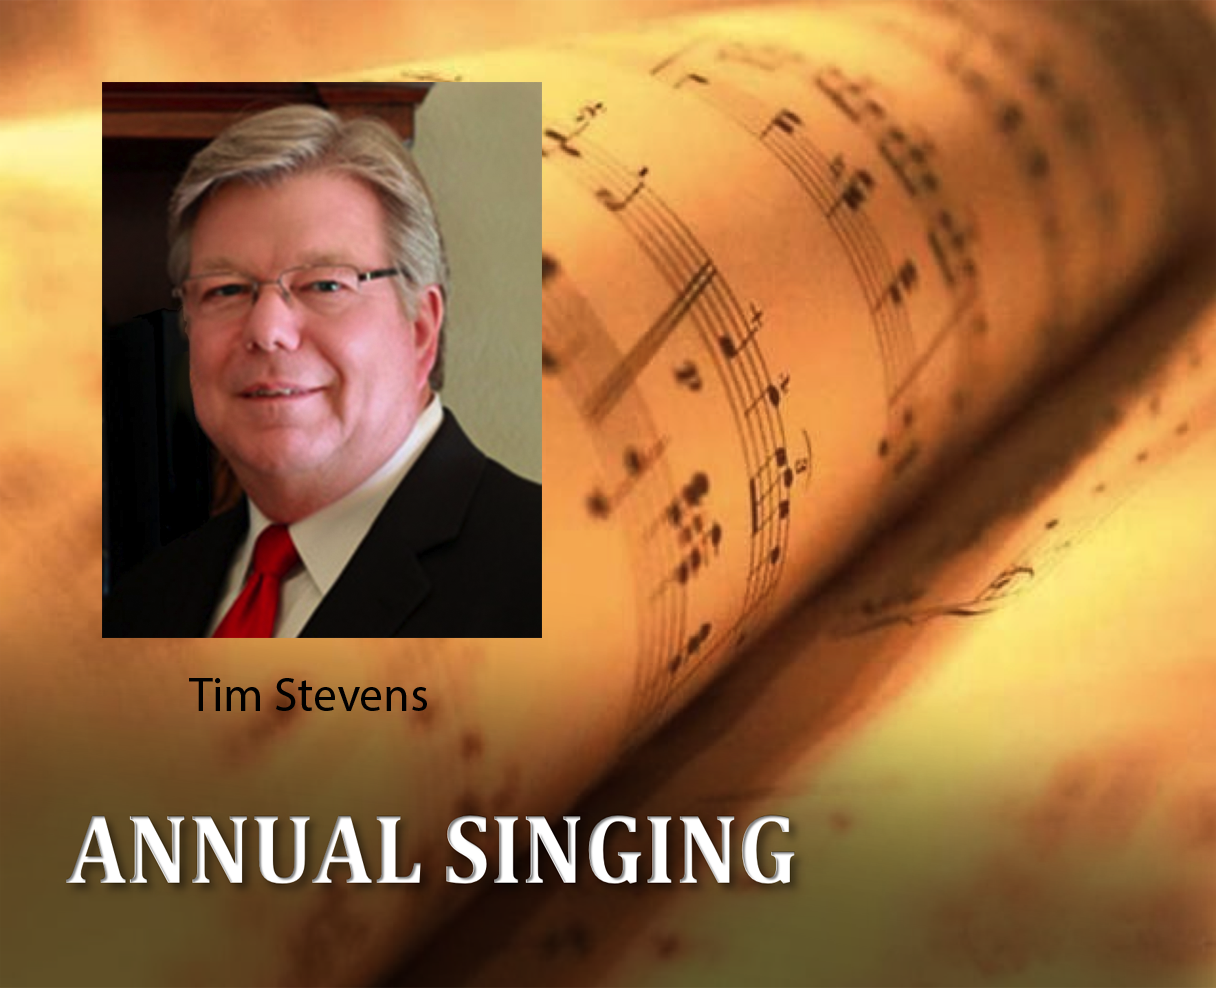 Annual Singing photo.